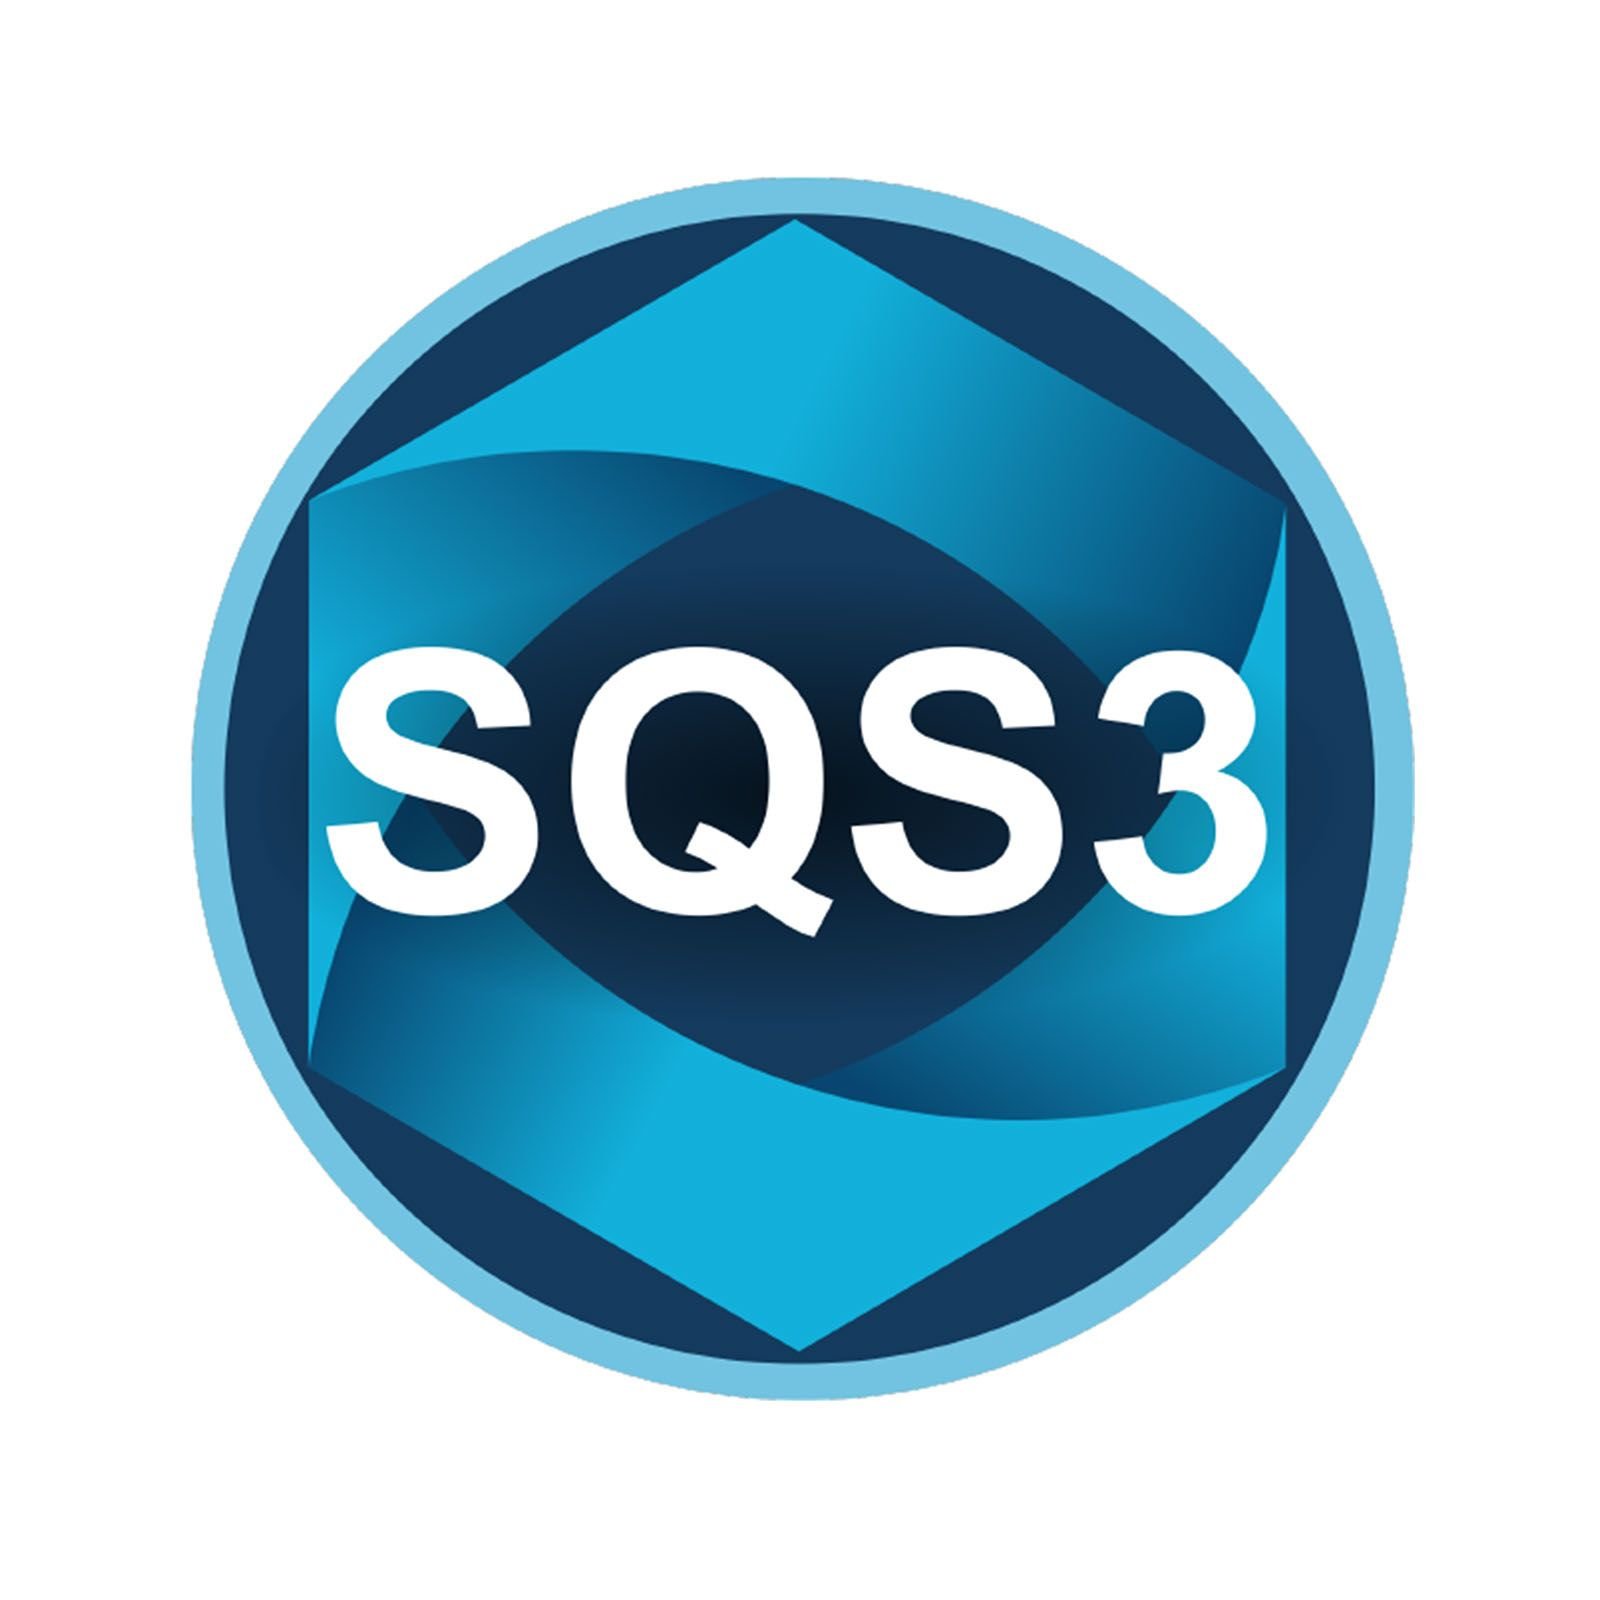 Scalable Quality Solution 3 SQS3 foto de producto